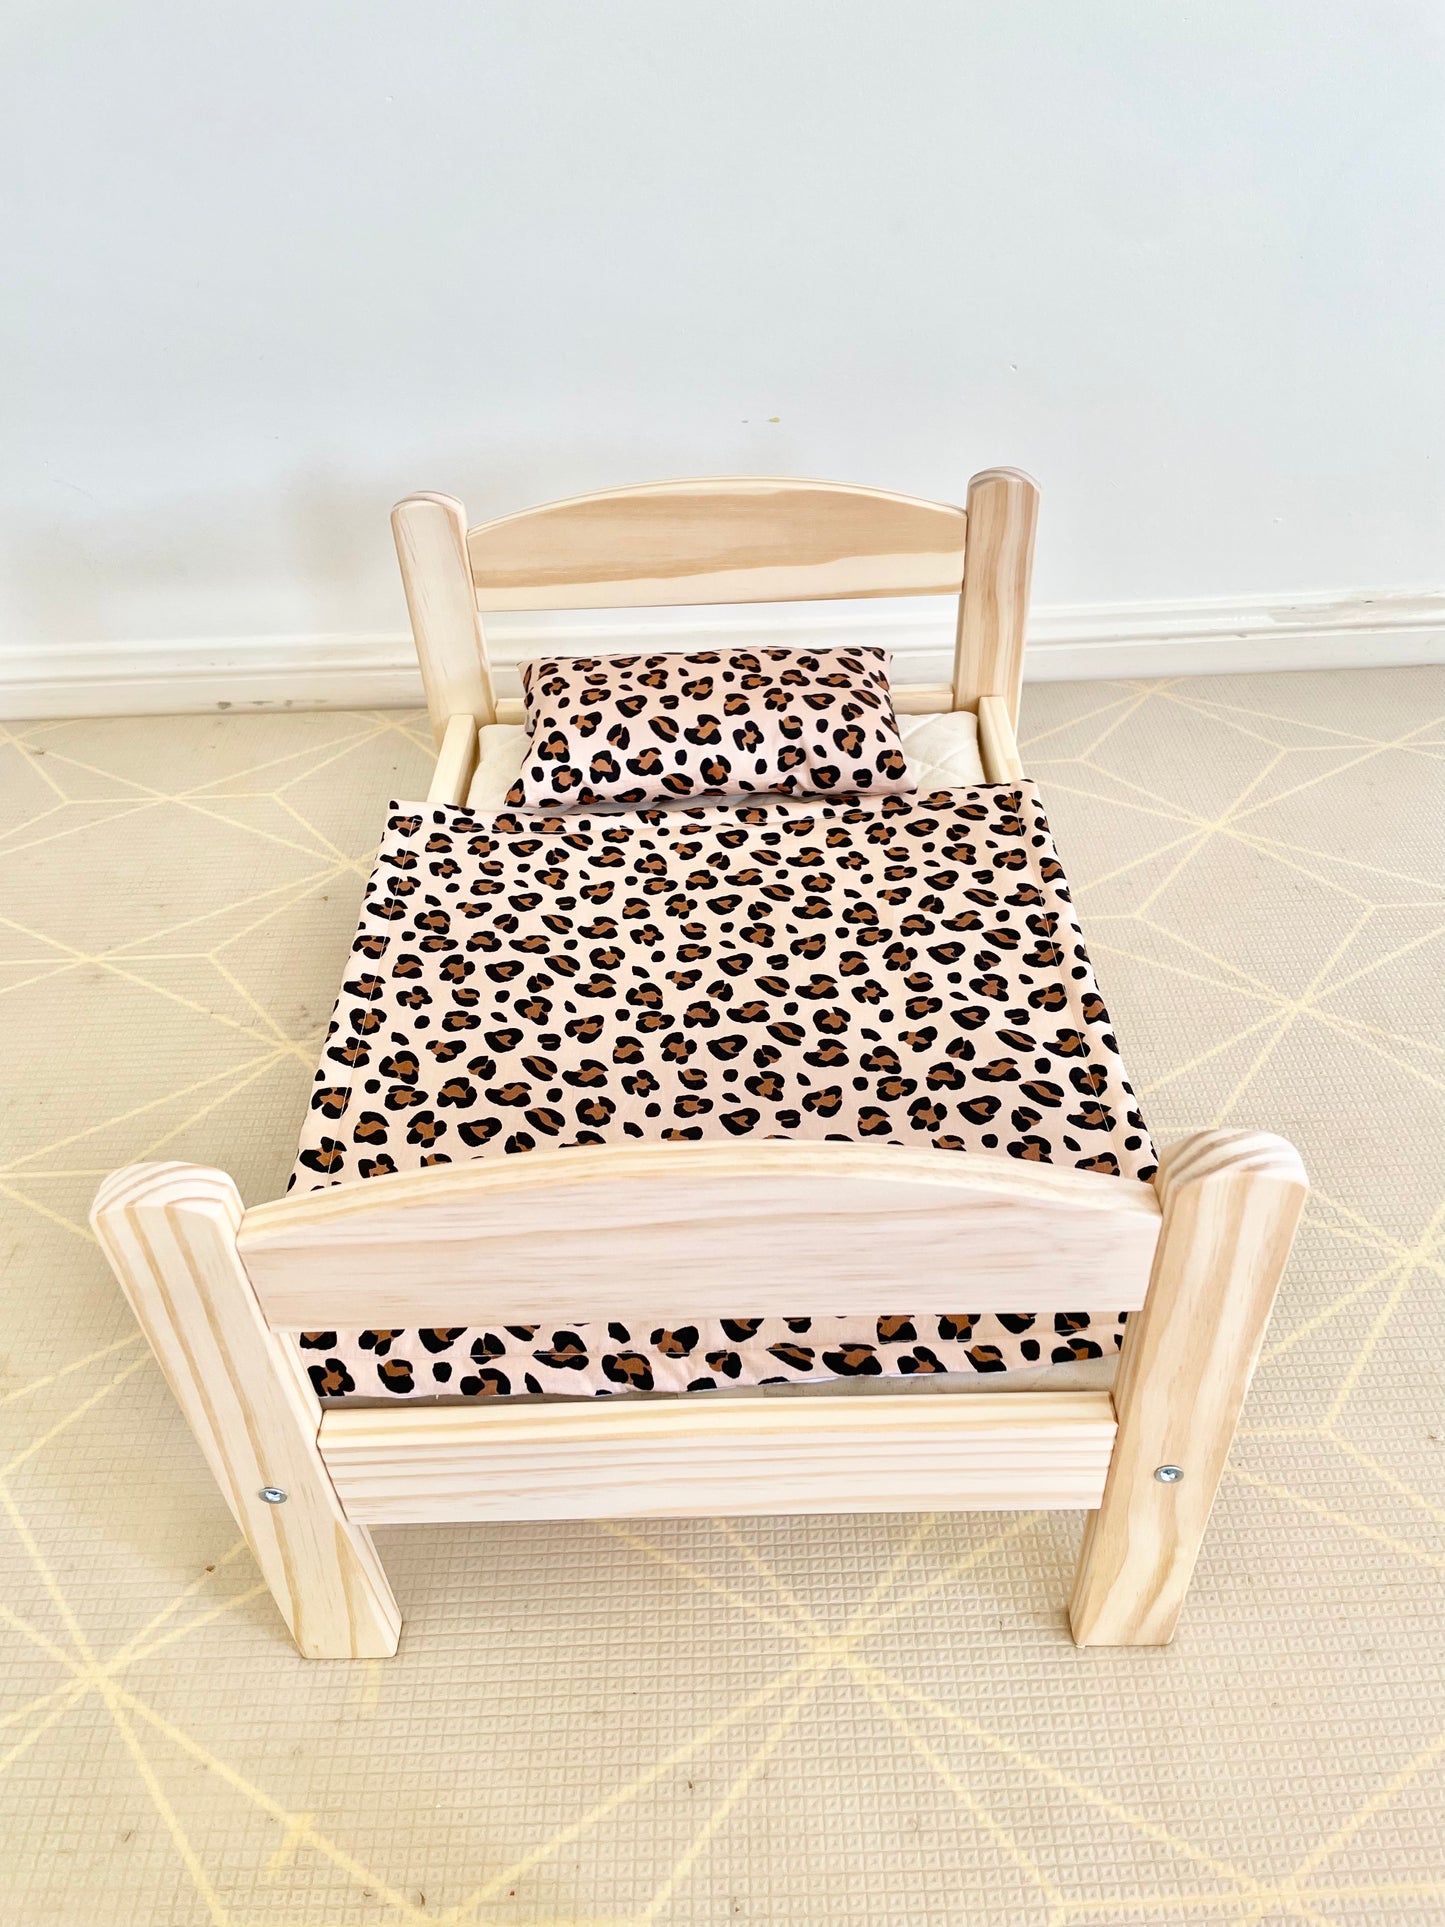 Leopard Doll Bedding